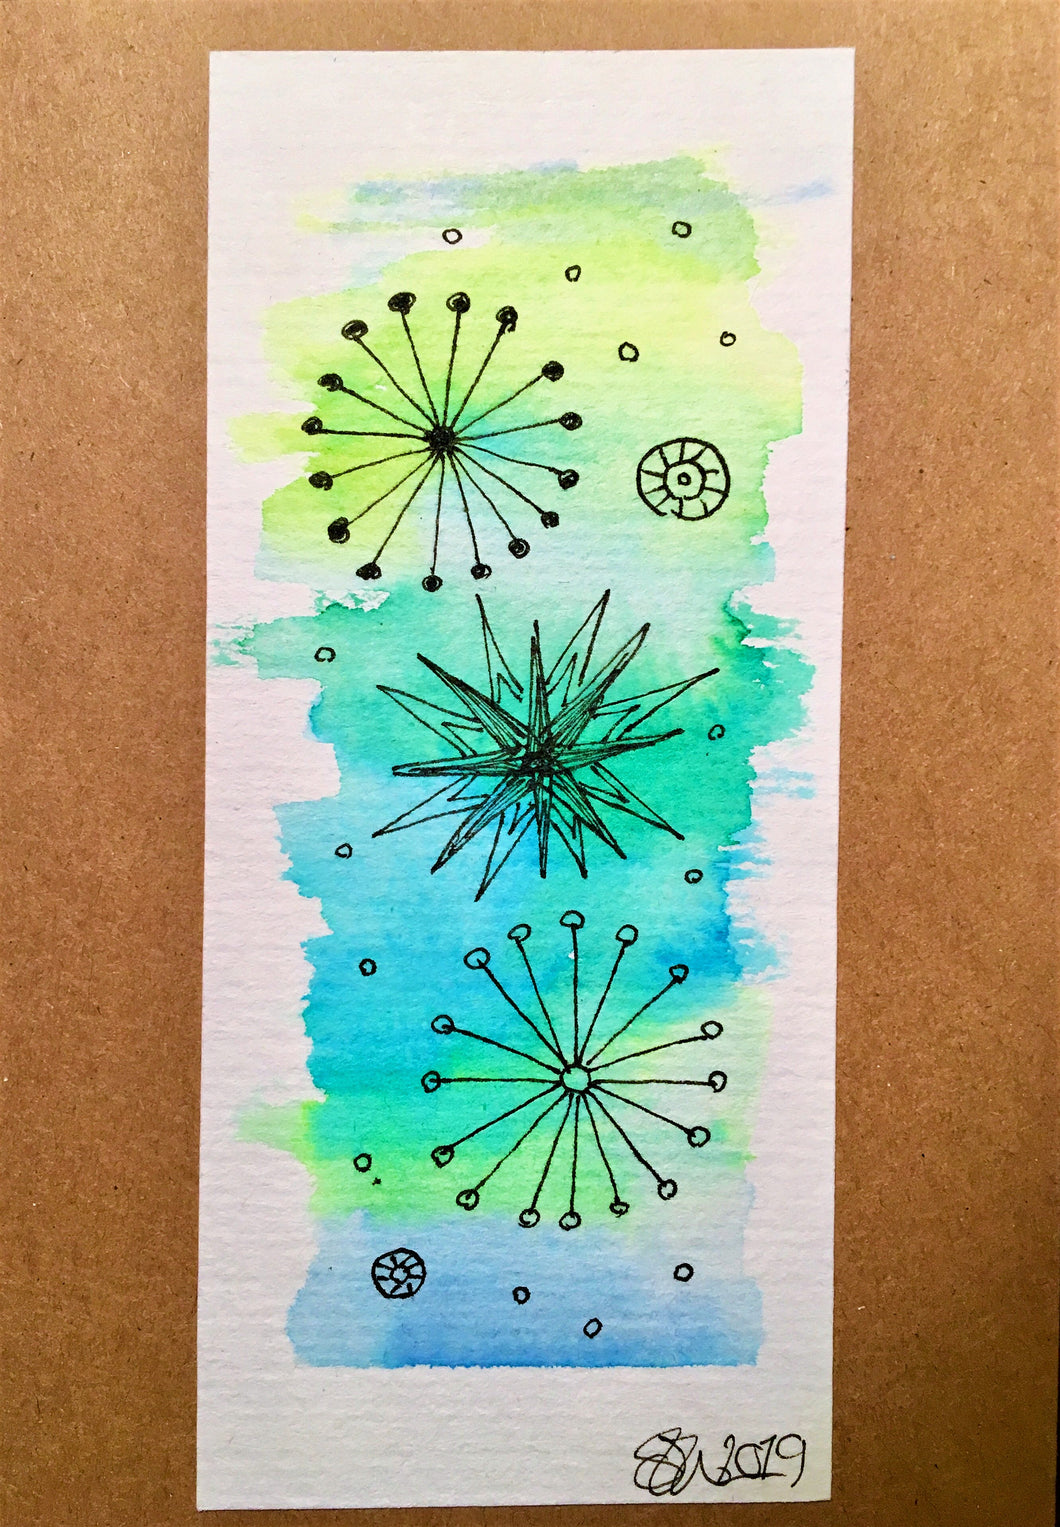 Handpainted Watercolour Greeting Card - Abstract Ink Star/Circle Design - Turquiose/Blue/Green - eDgE dEsiGn London